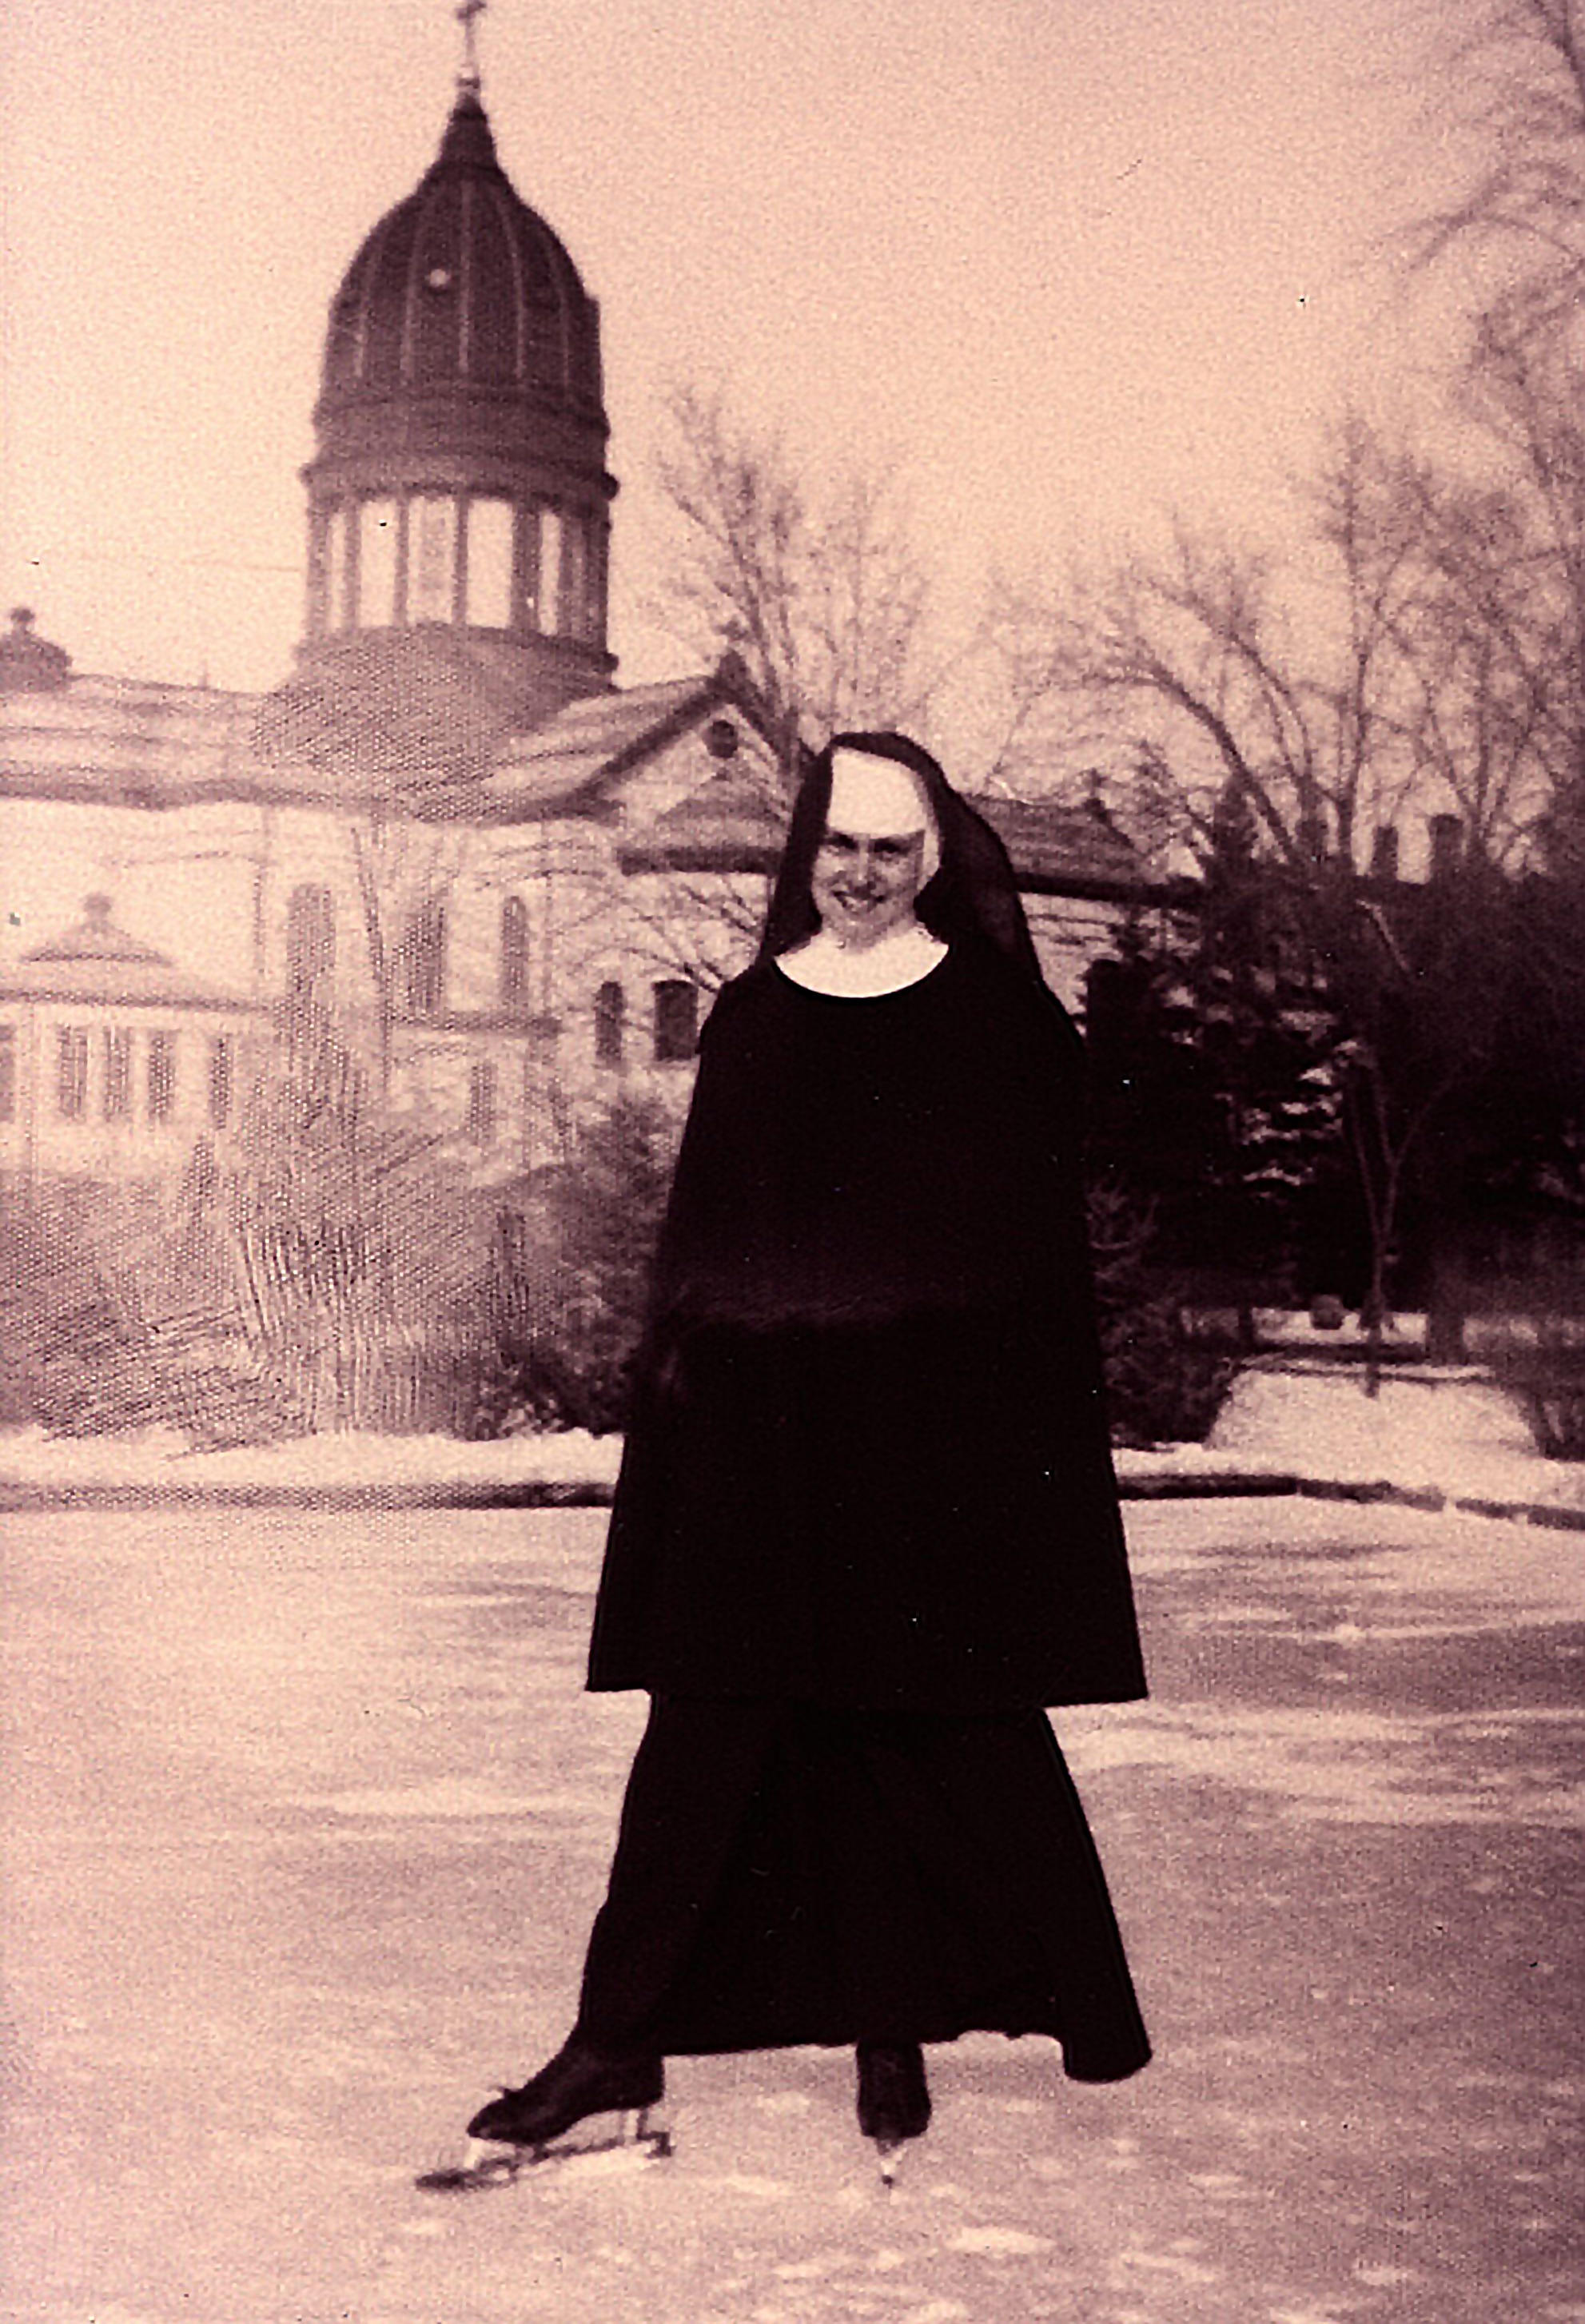 Sister Mariella Gable